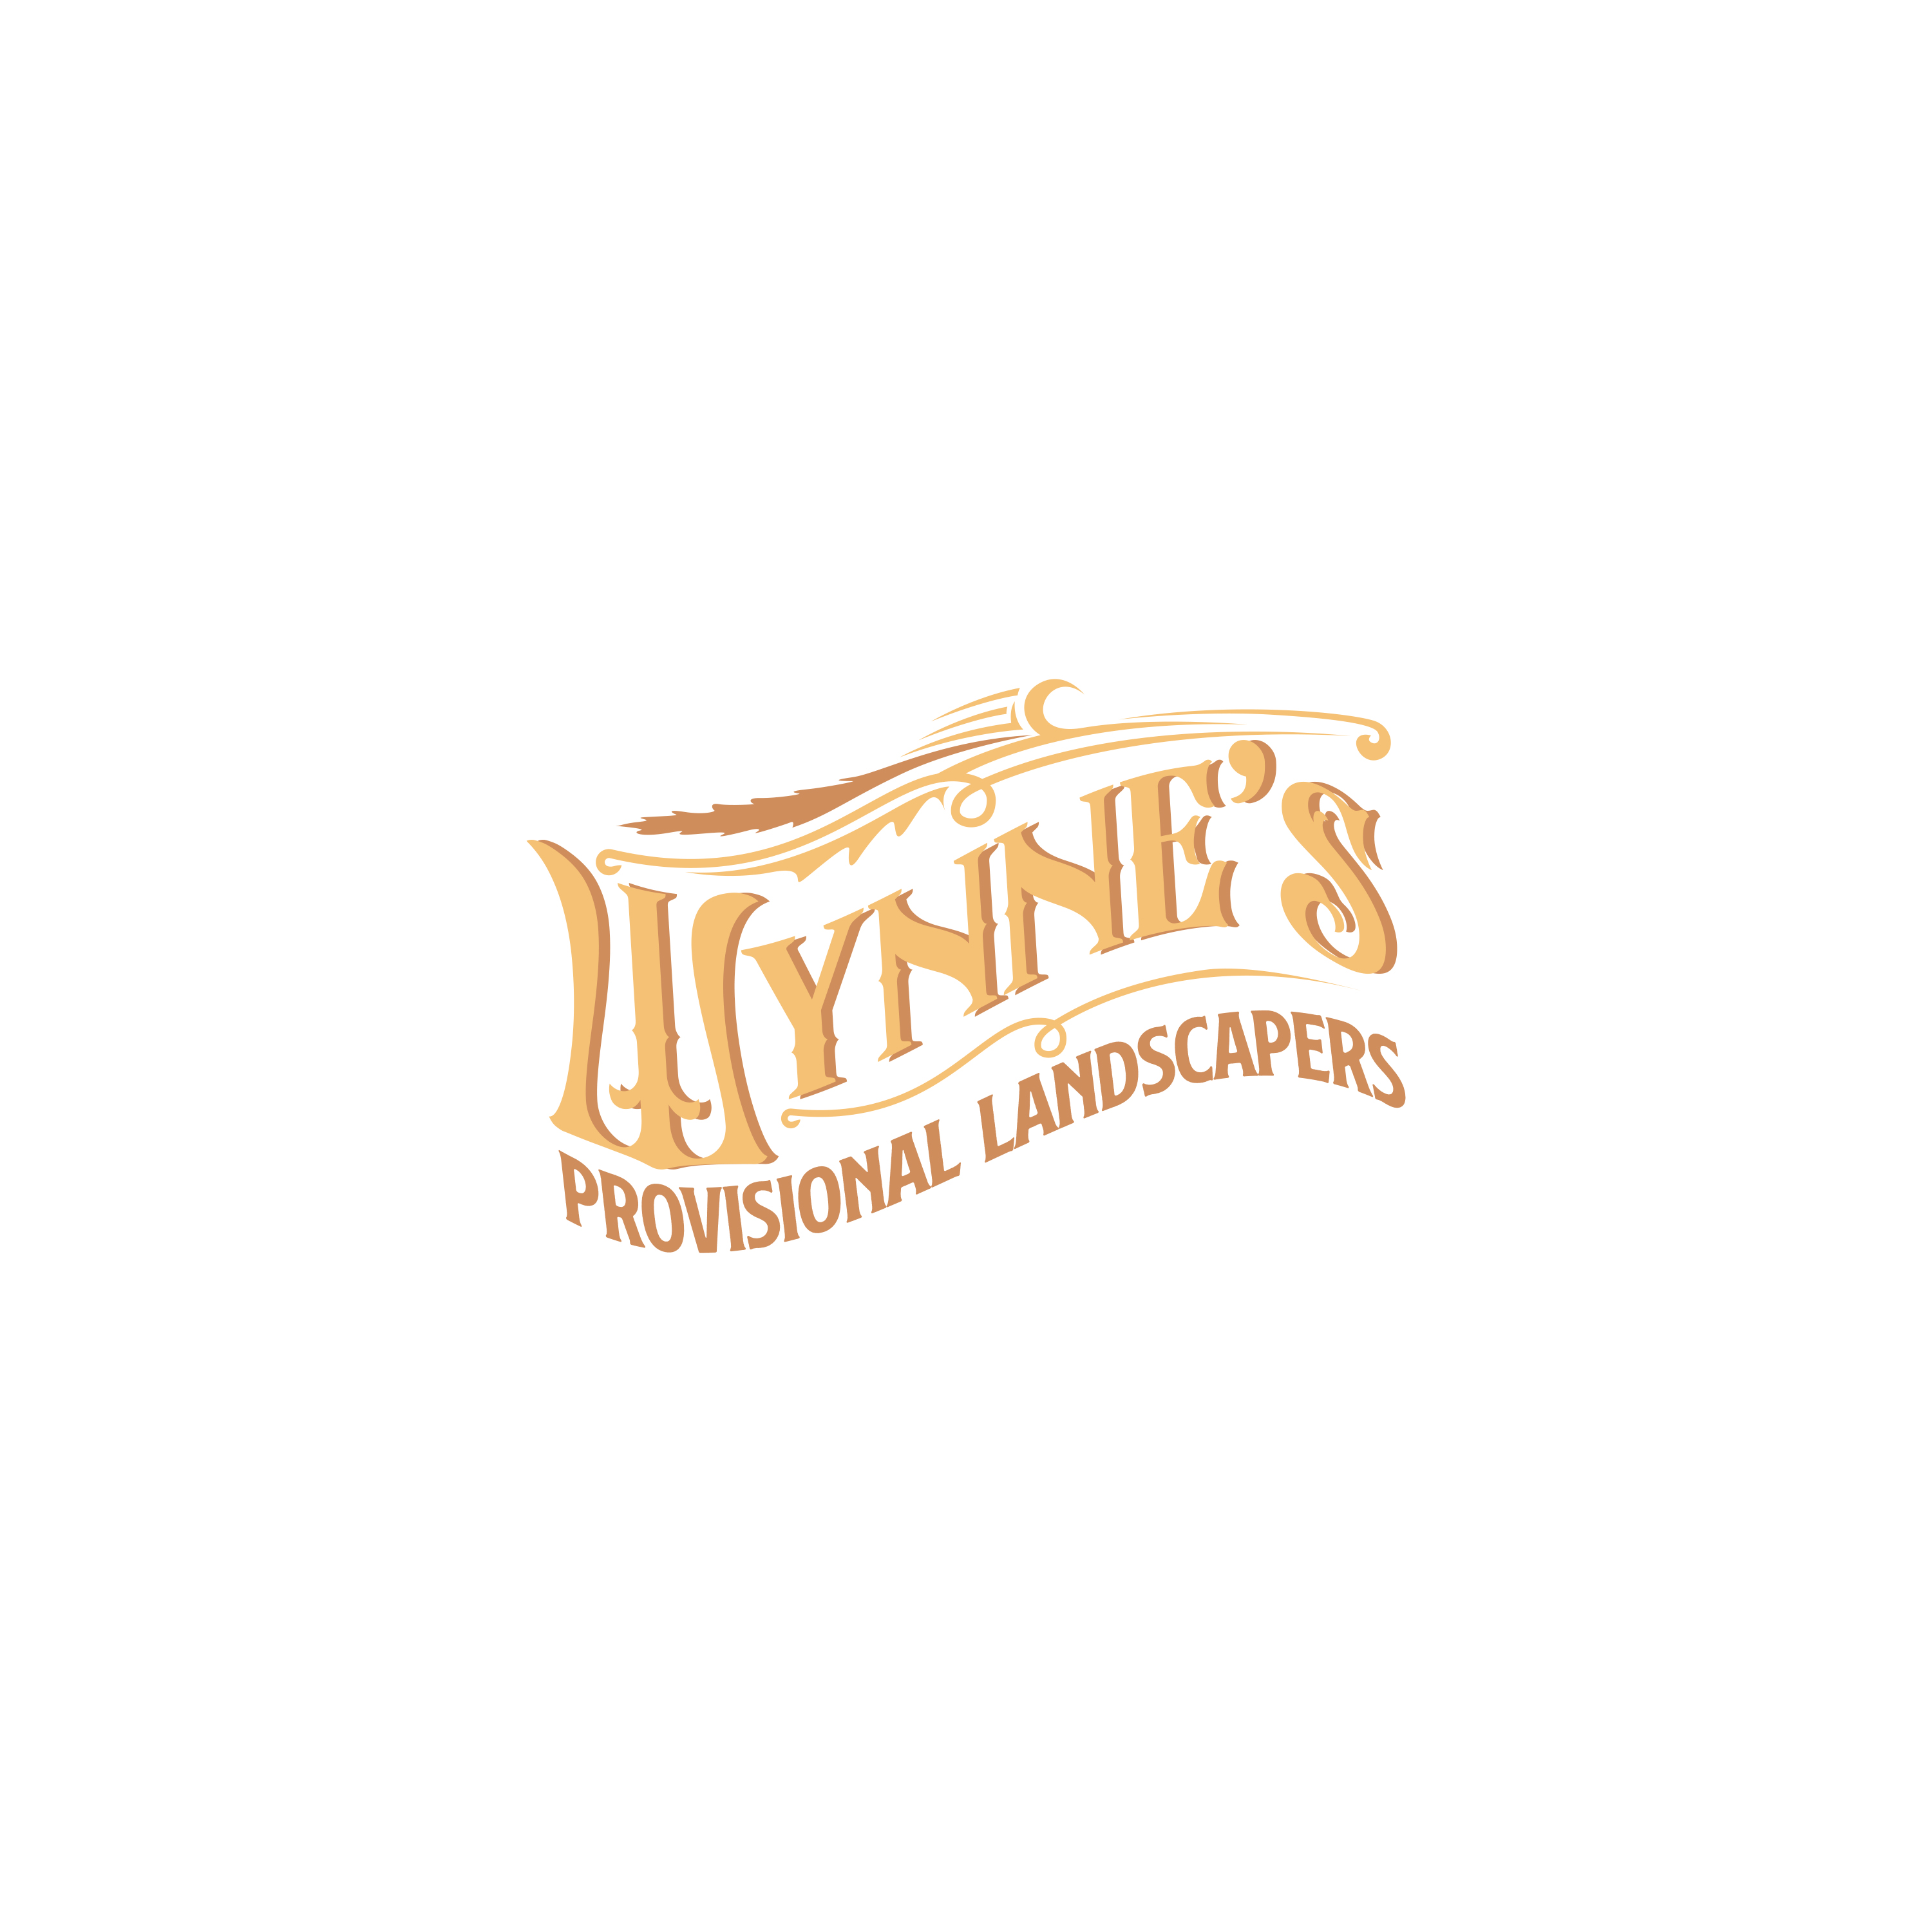 Wynne's Provisional Landscapers Logo Social Media Square.jpg